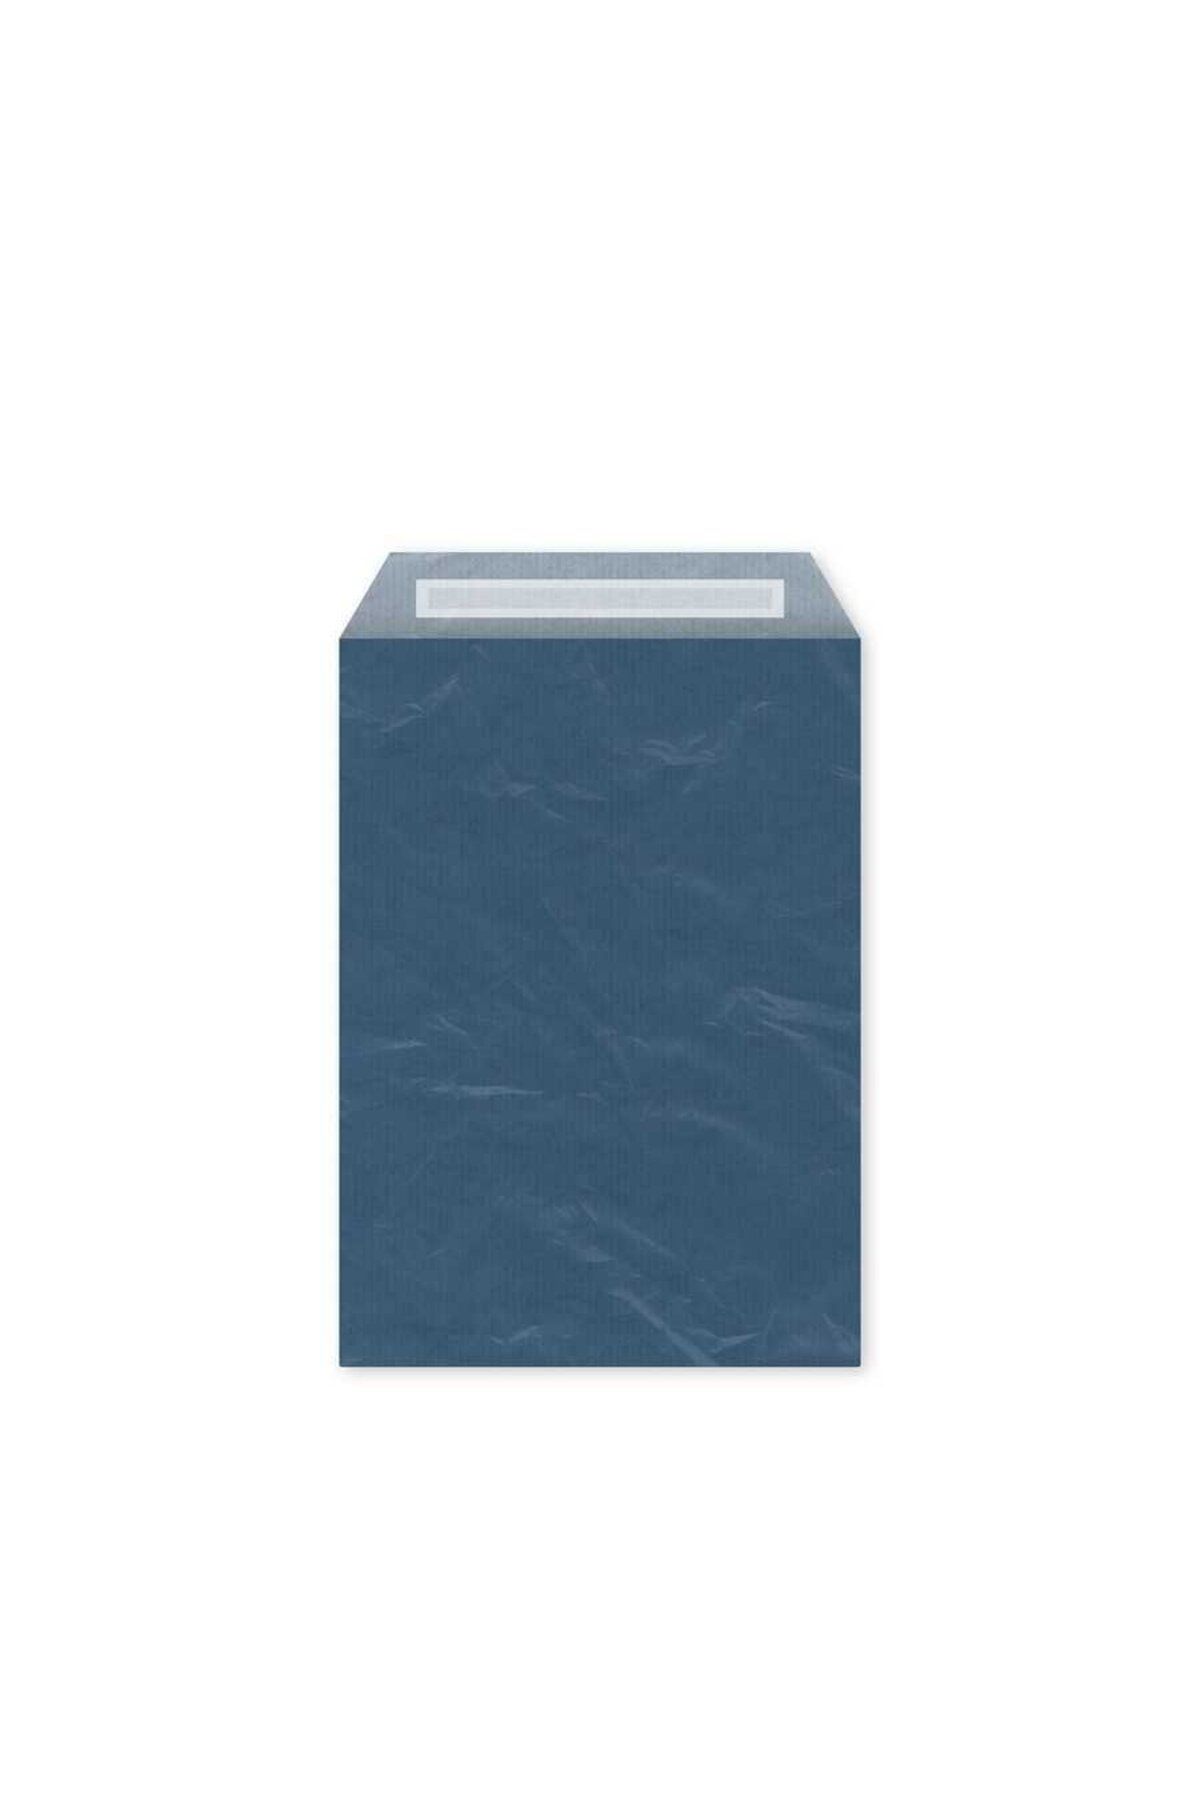 Roll Up Bantlı Hediye Paketi Kağıt Mavi 20x6x25,5 cm - 25 Adet